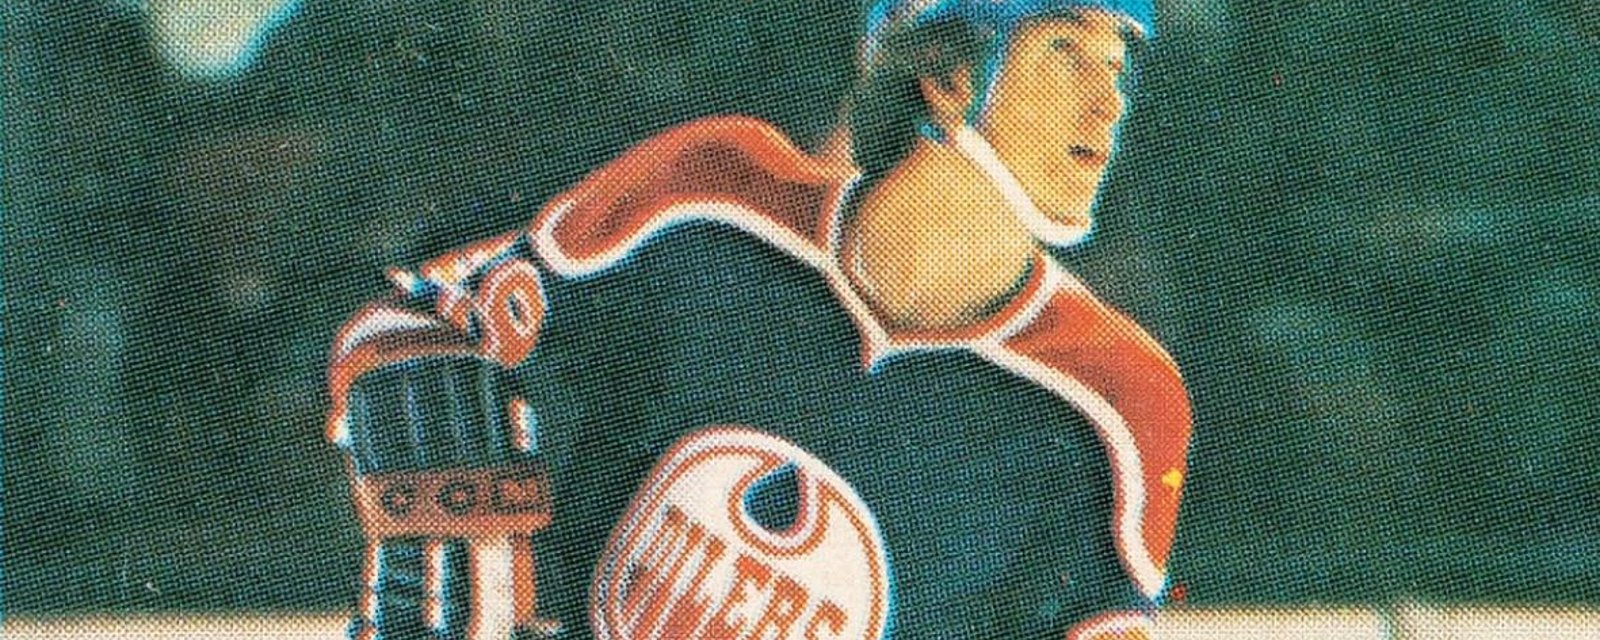 Wayne Gretzky rookie card set to break all time record.